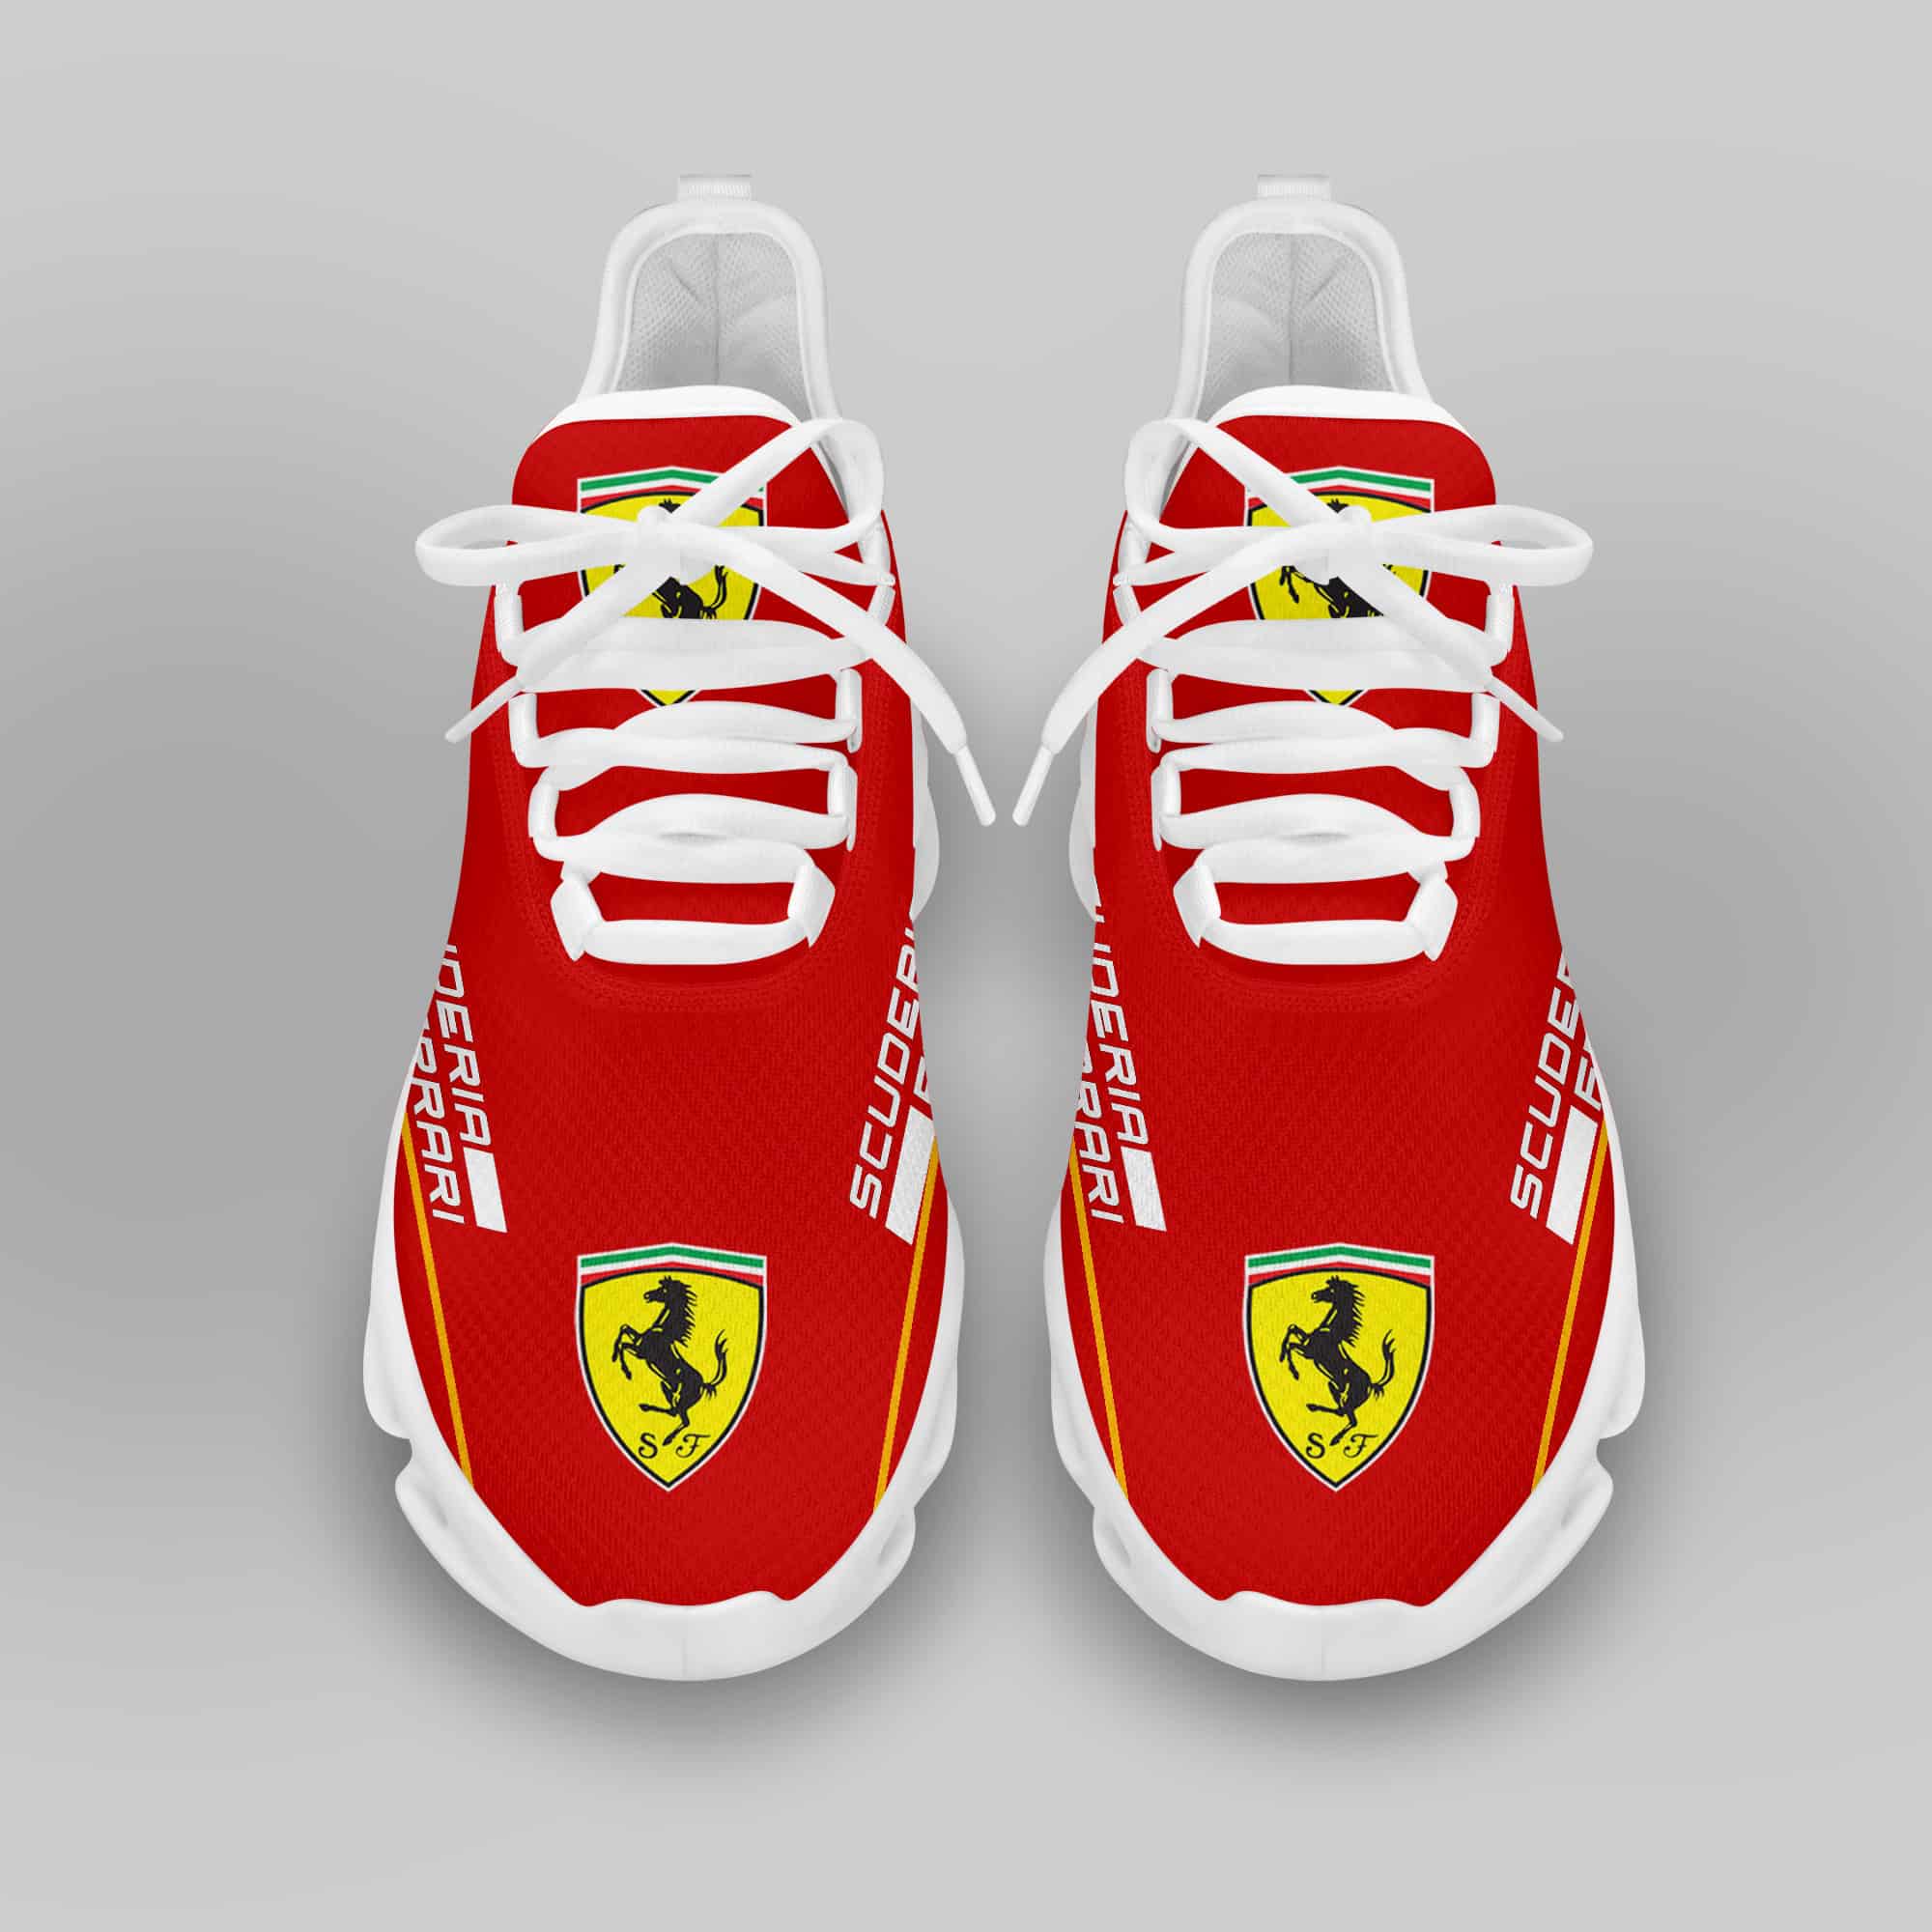 Ferrari Sneaker Running Shoes Max Soul Shoes Sneakers Ver 14 3